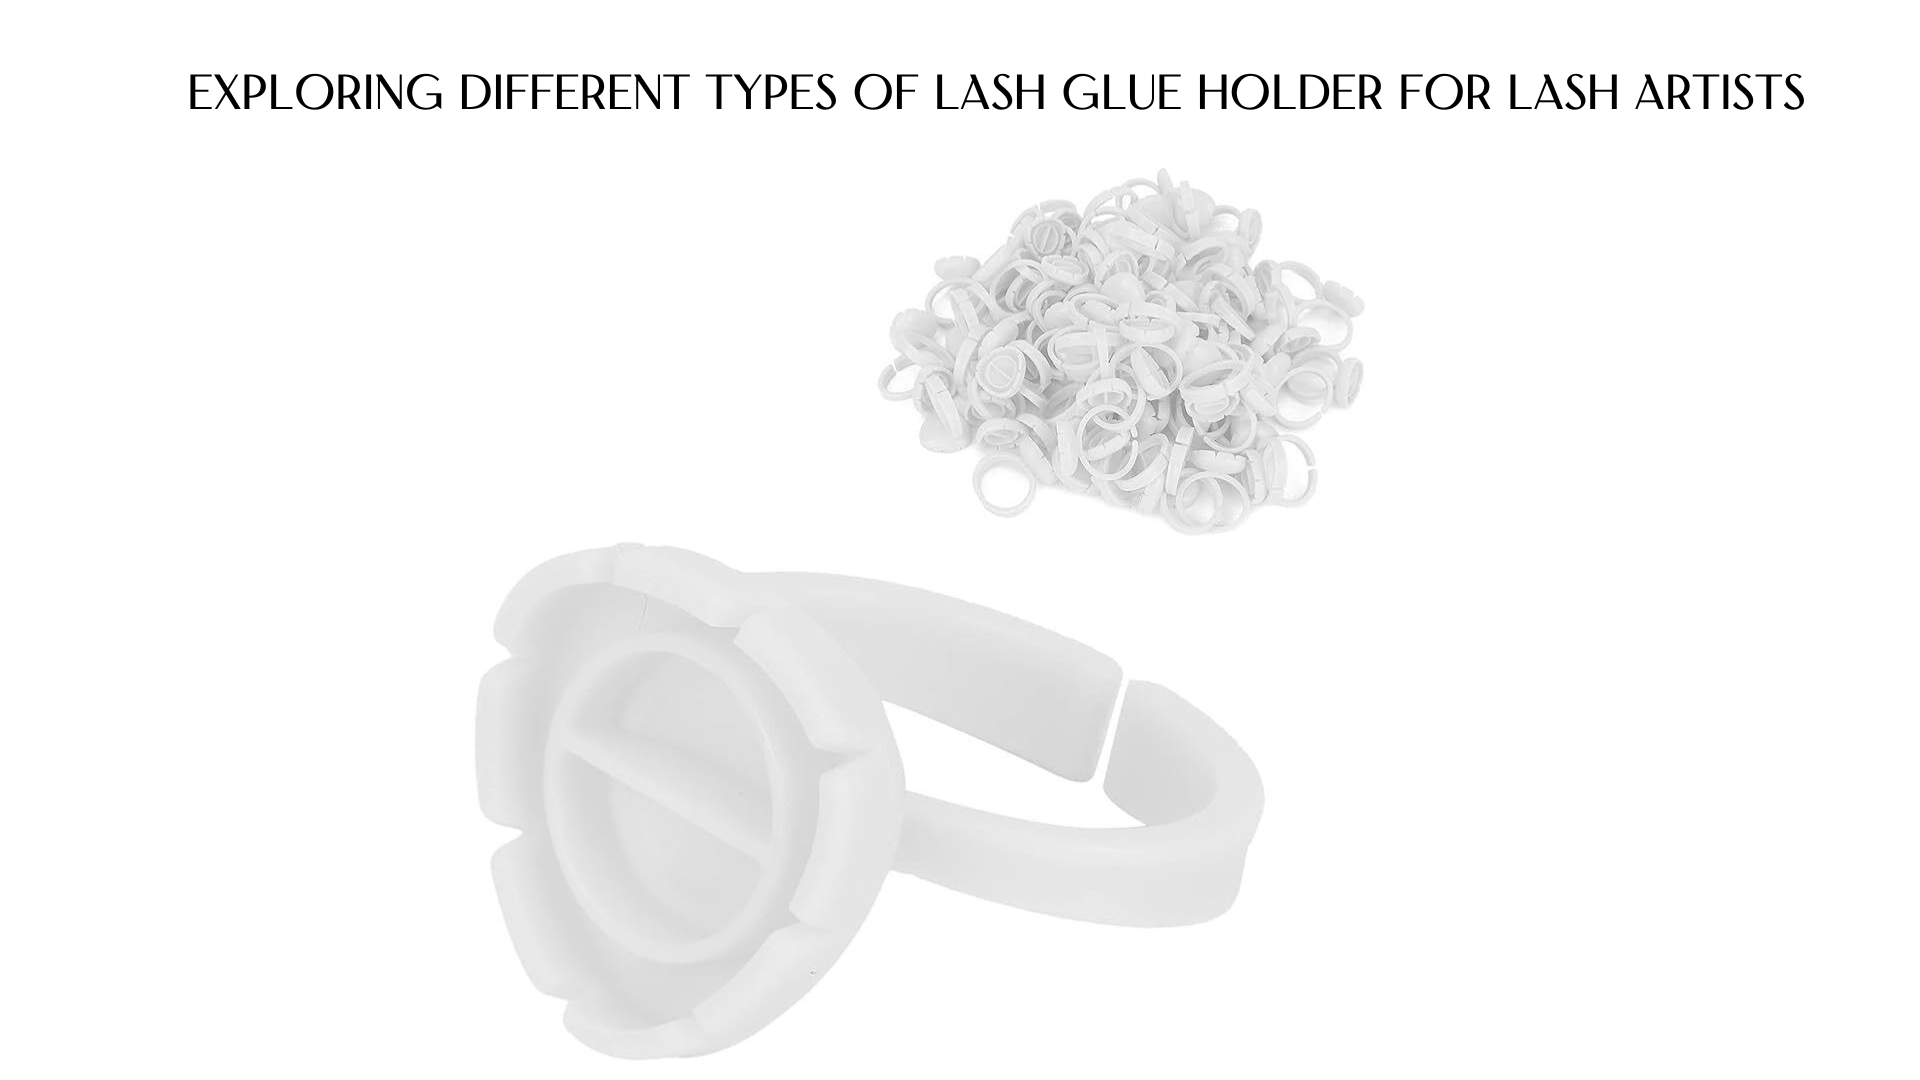 Exploring different types of lash glue holder for lash artists